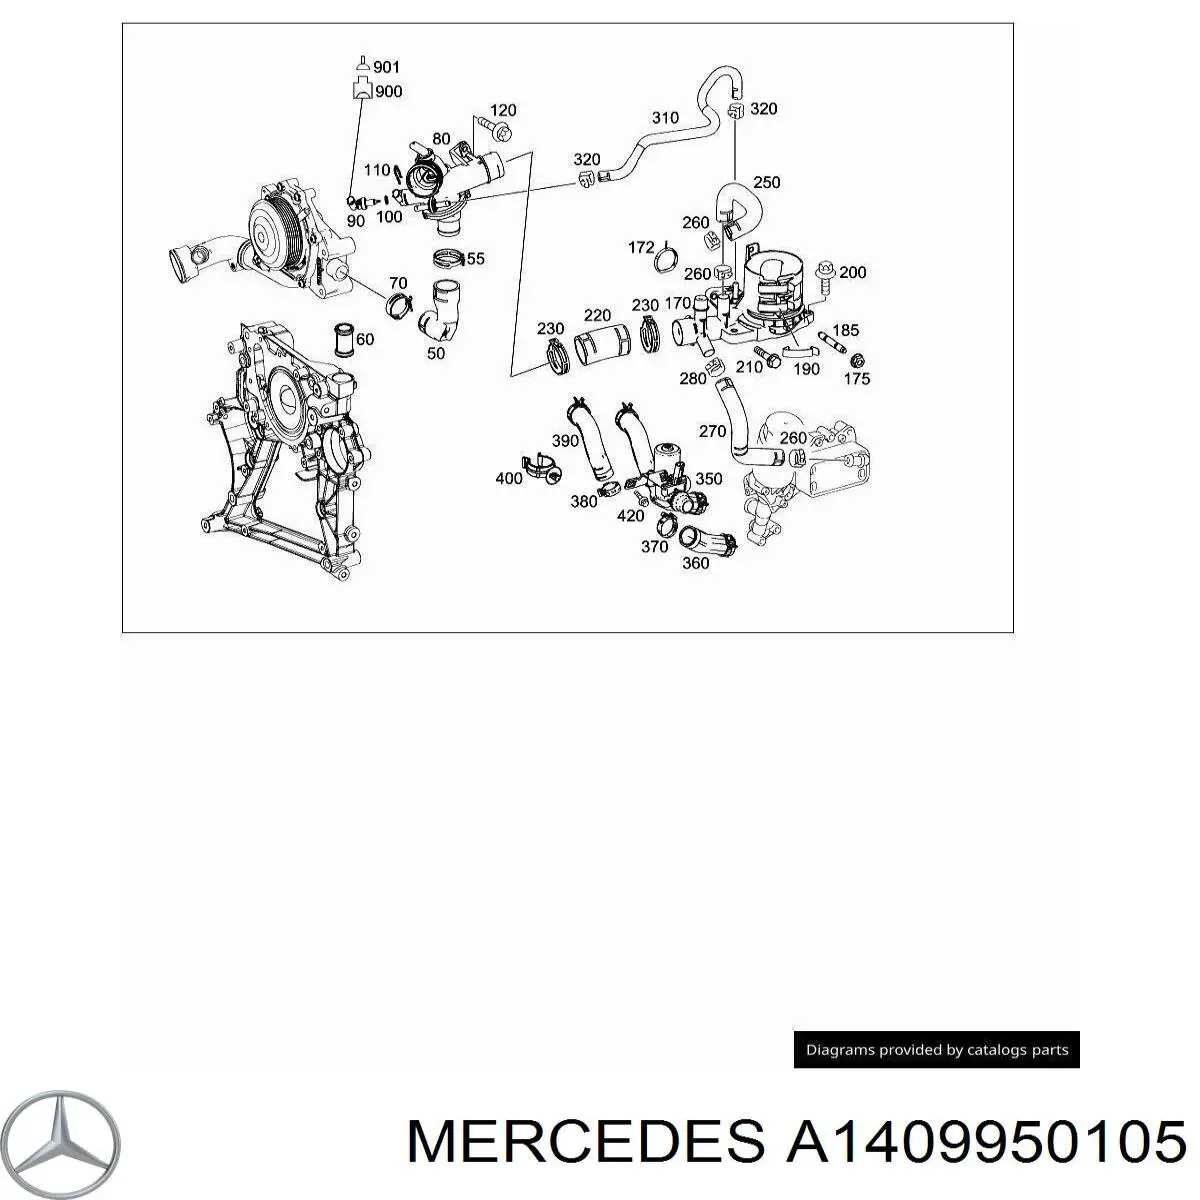 A1409950105 Mercedes